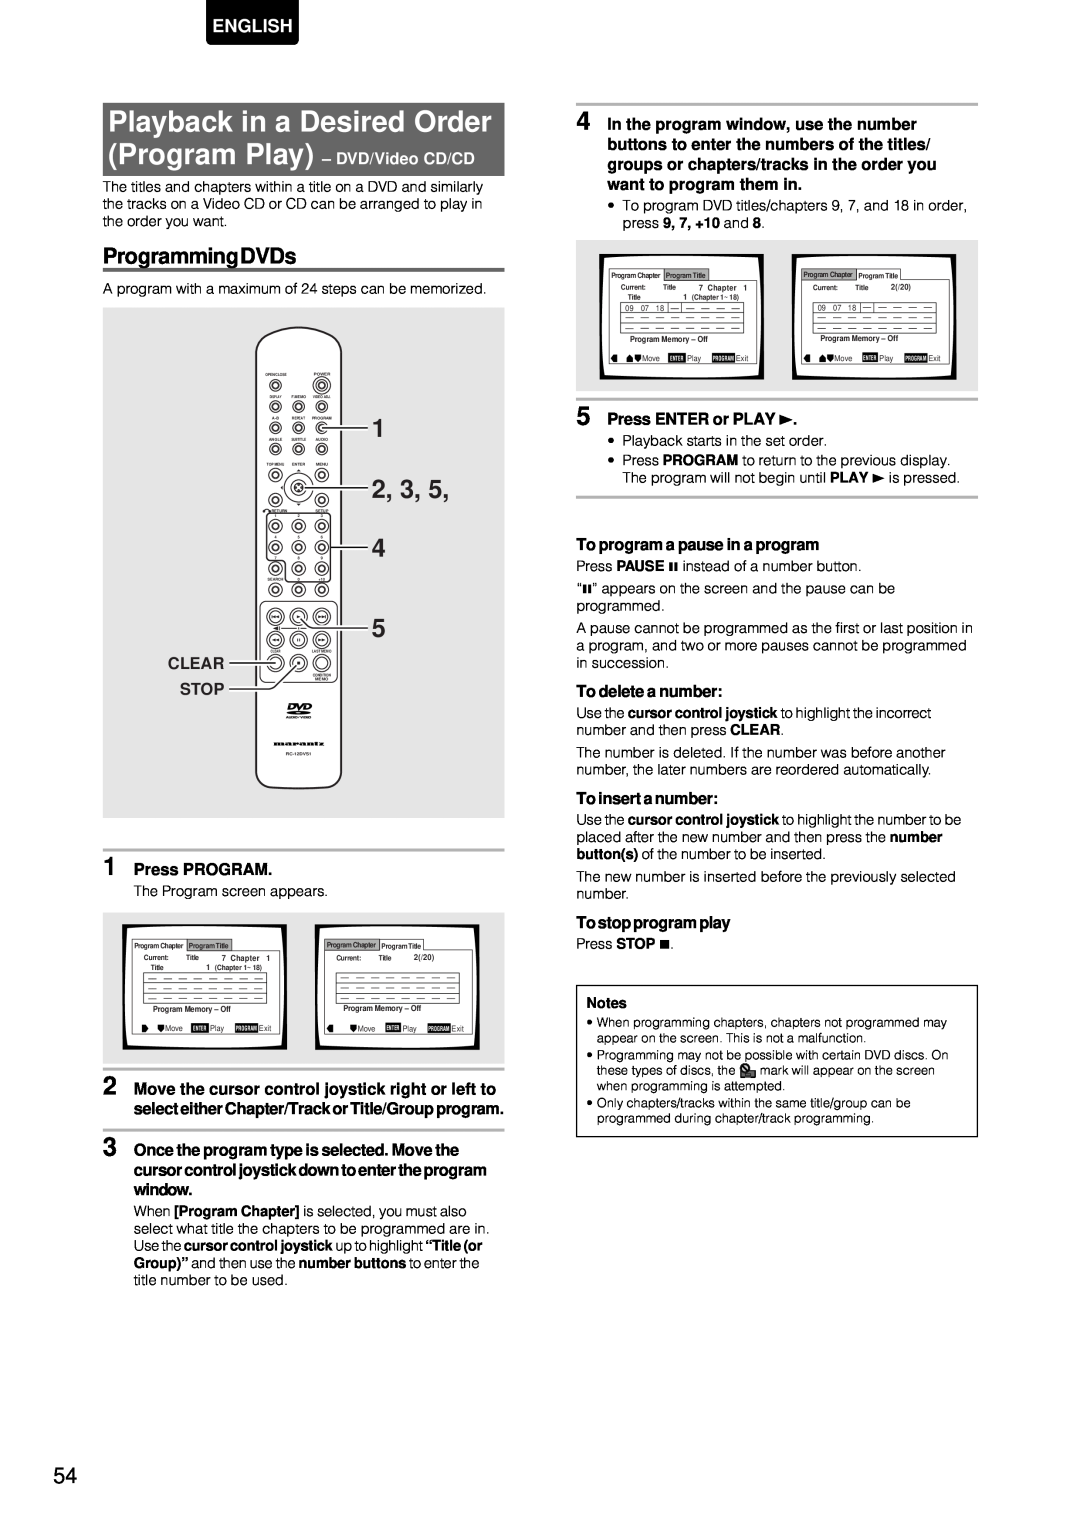 Marantz DV-12S1 Playback in a Desired Order, ProgrammingDVDs, Program Play - DVD/Video CD/CD, Press PROGRAM, 2, 3, English 